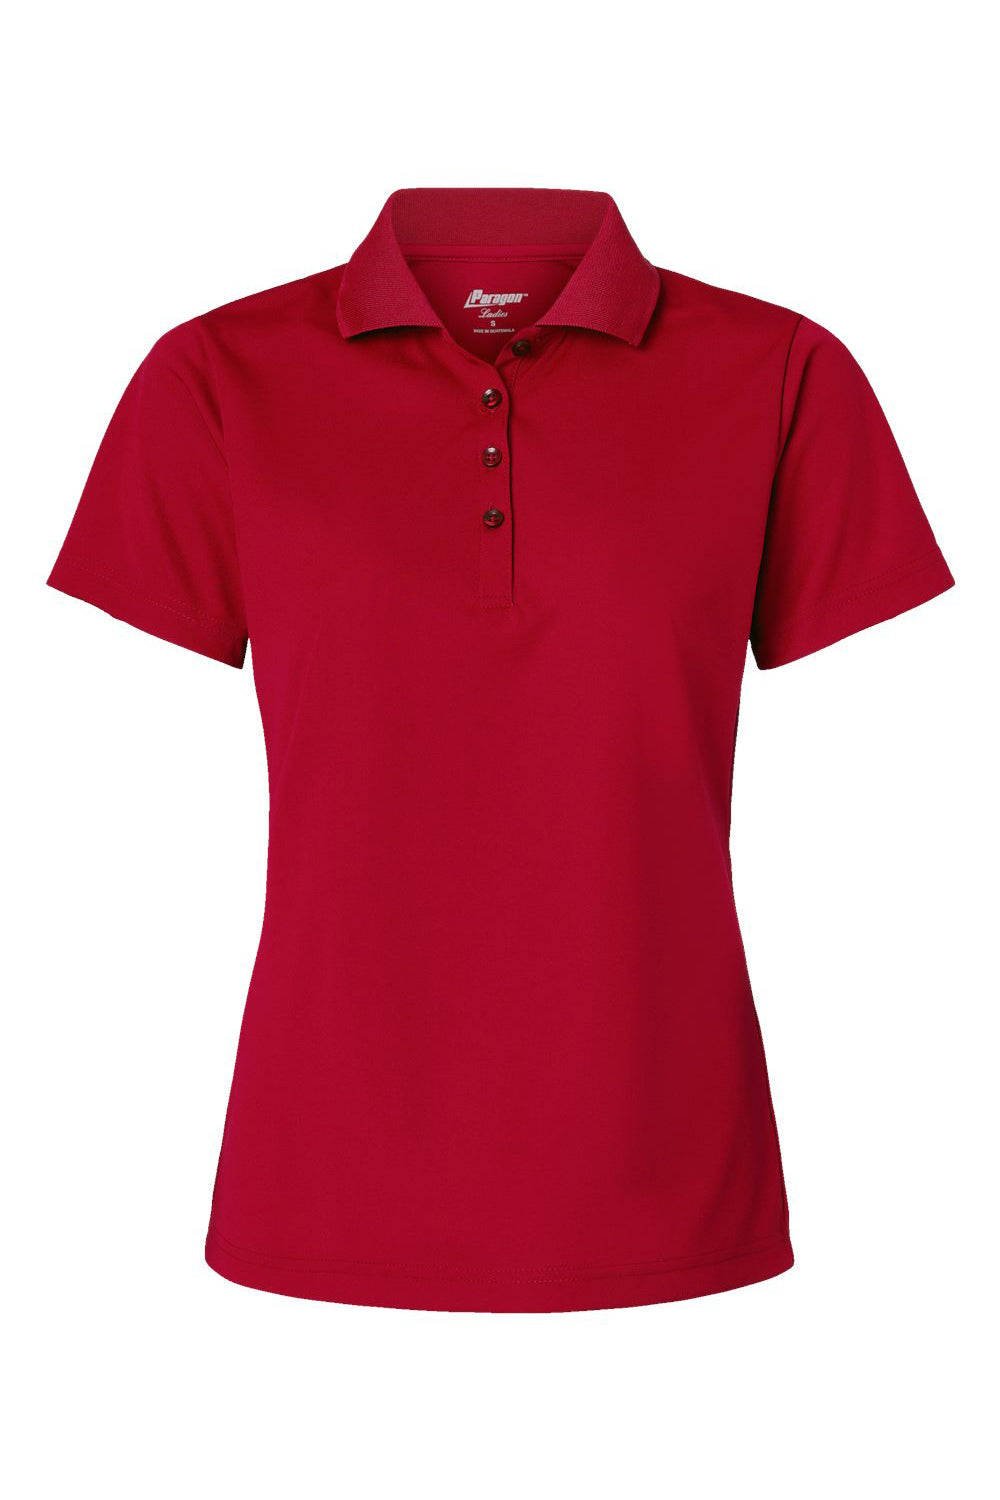 Paragon 504 Womens Sebring Performance Short Sleeve Polo Shirt Deep Red Flat Front